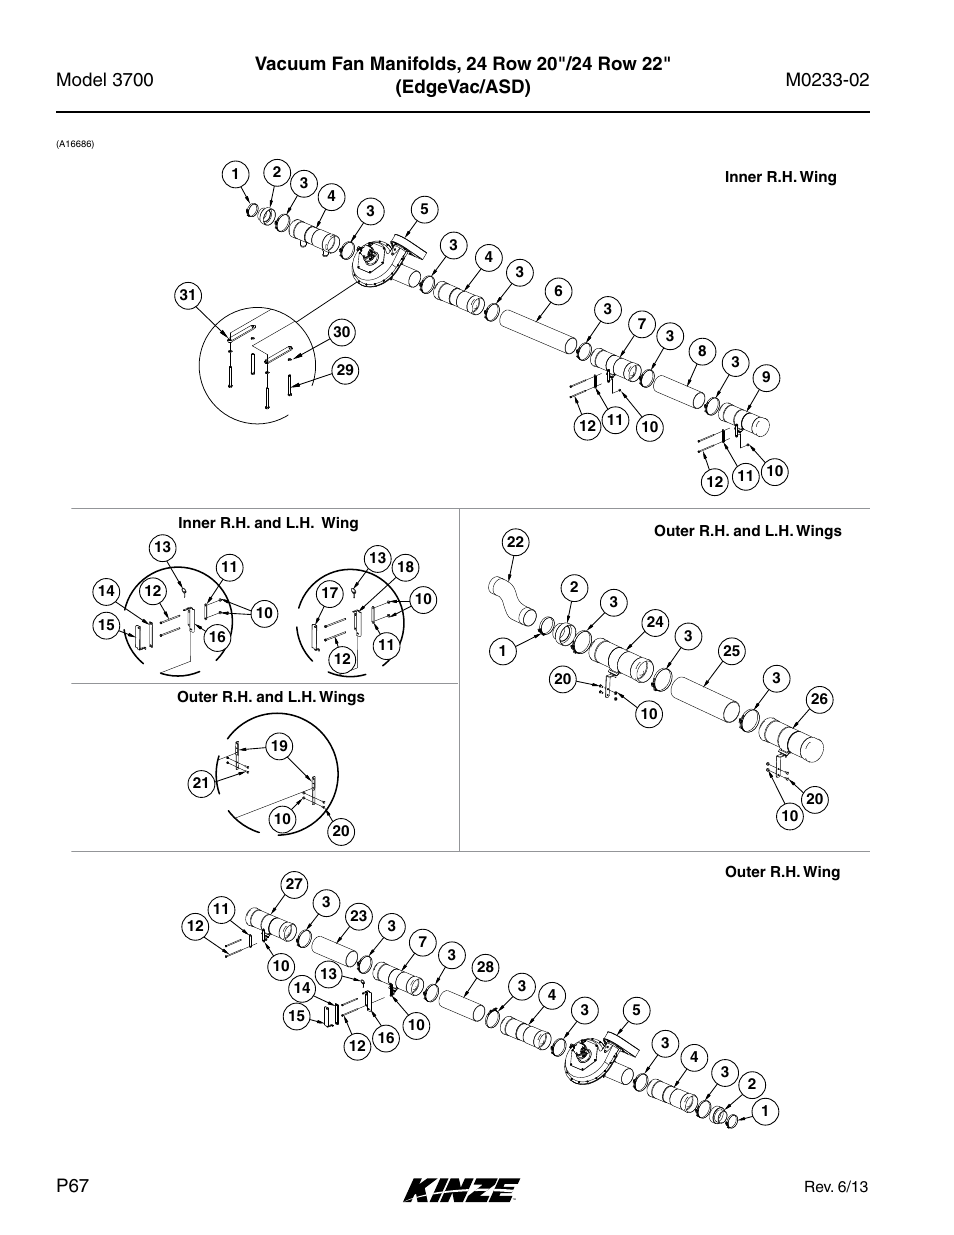 Vacuum fan manifolds, 24 row 20"/24 row 22 | Kinze 3700 Front Folding Planter Rev. 6/14 User Manual | Page 70 / 284